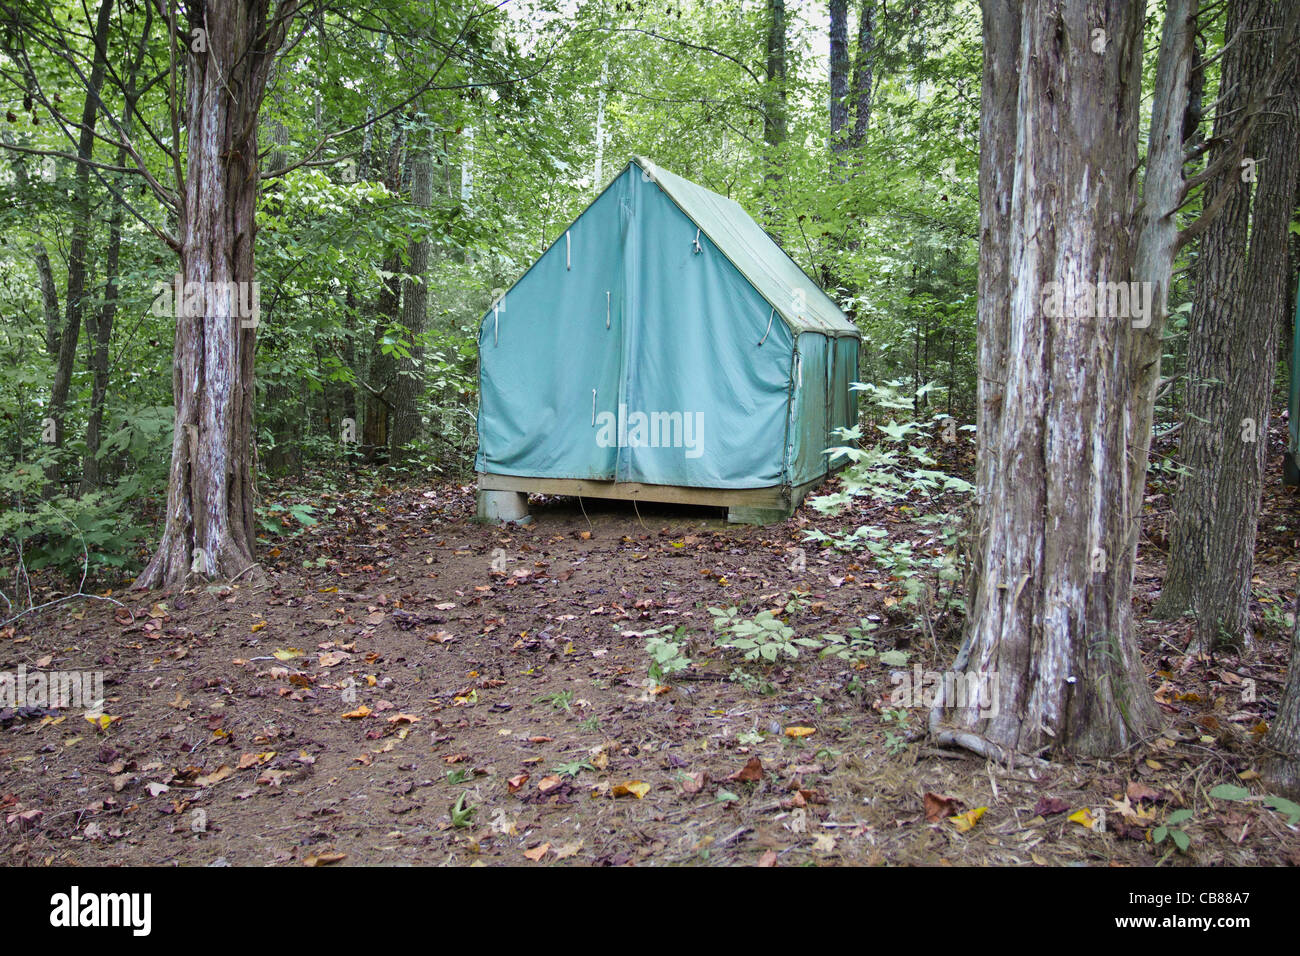 Tenda nel bosco Foto stock - Alamy